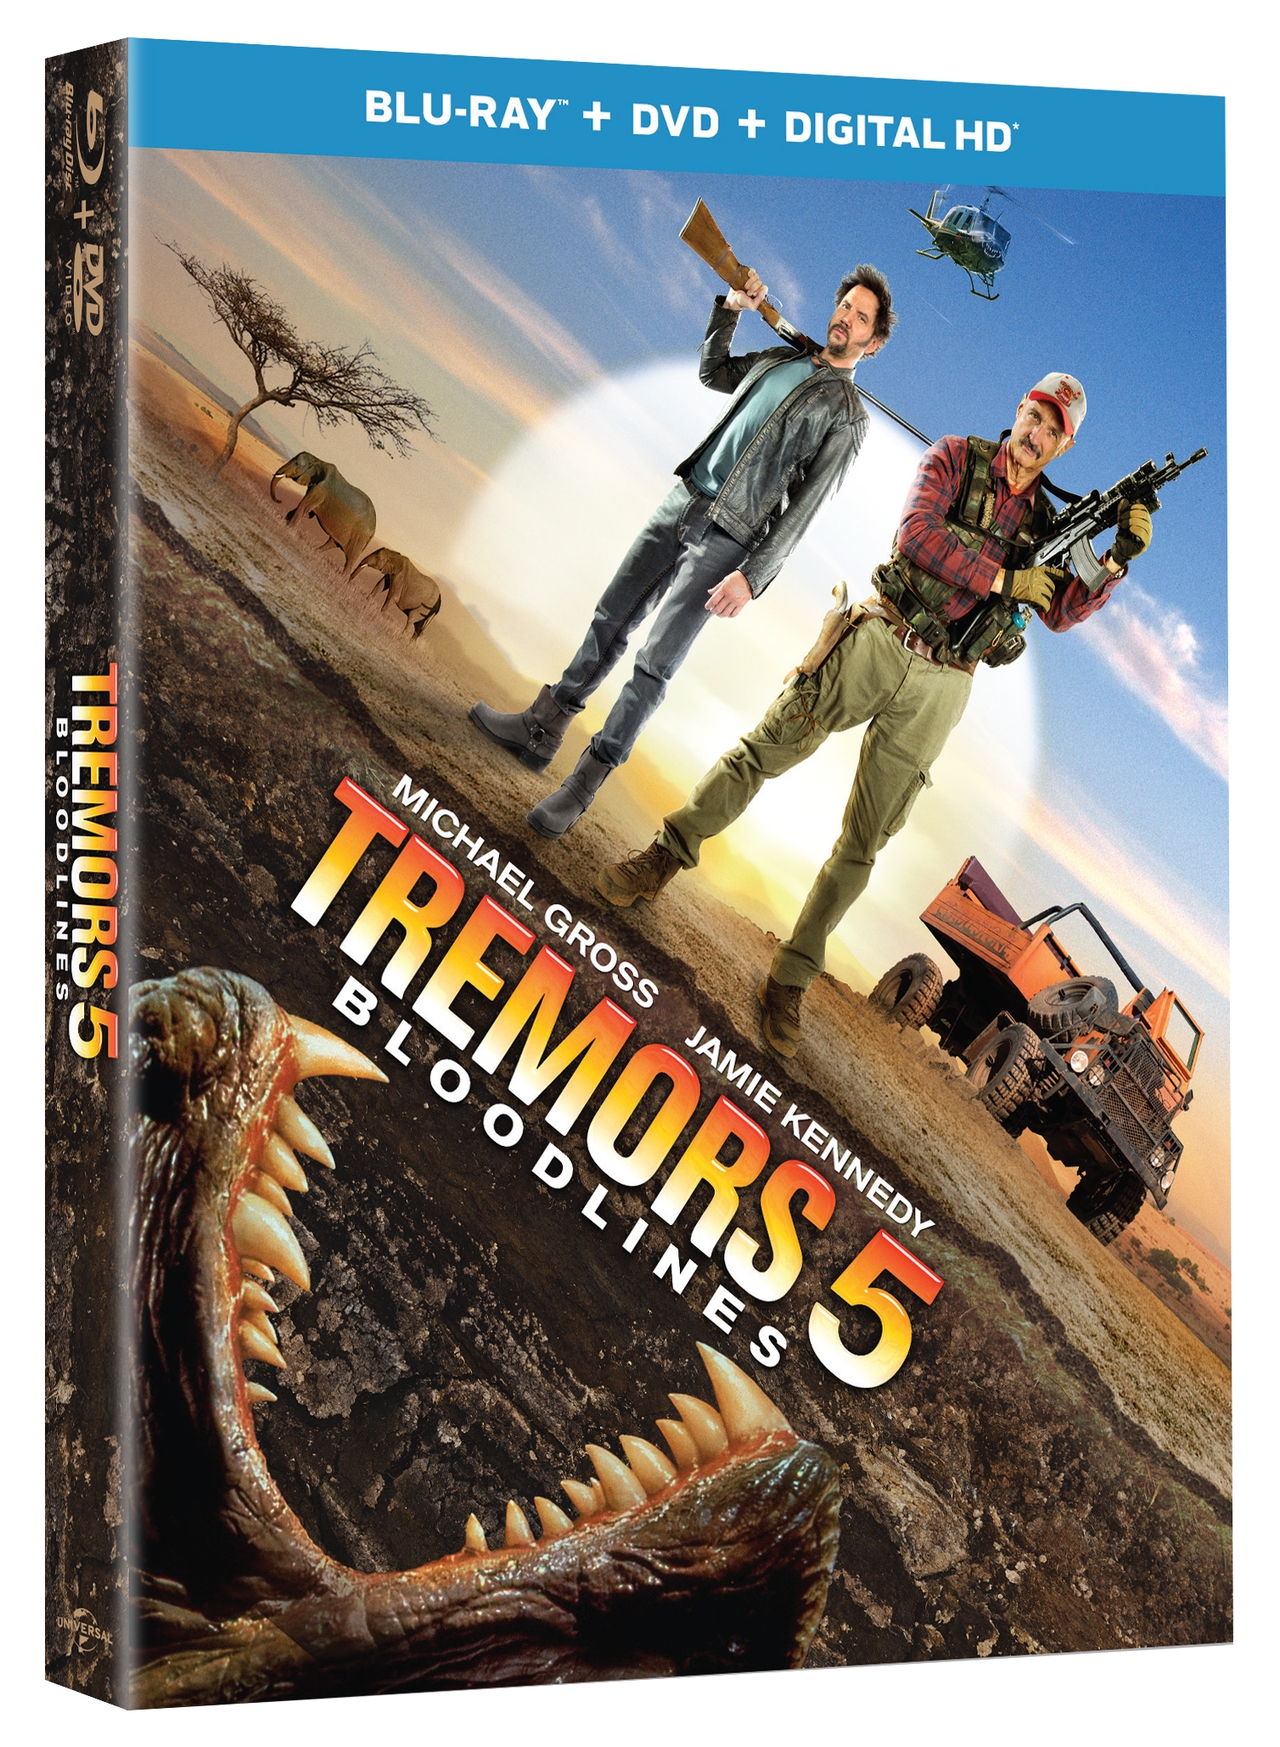 Michael Gross در صحنه فیلم سینمایی Tremors 5: Bloodlines به همراه جیمی کندی